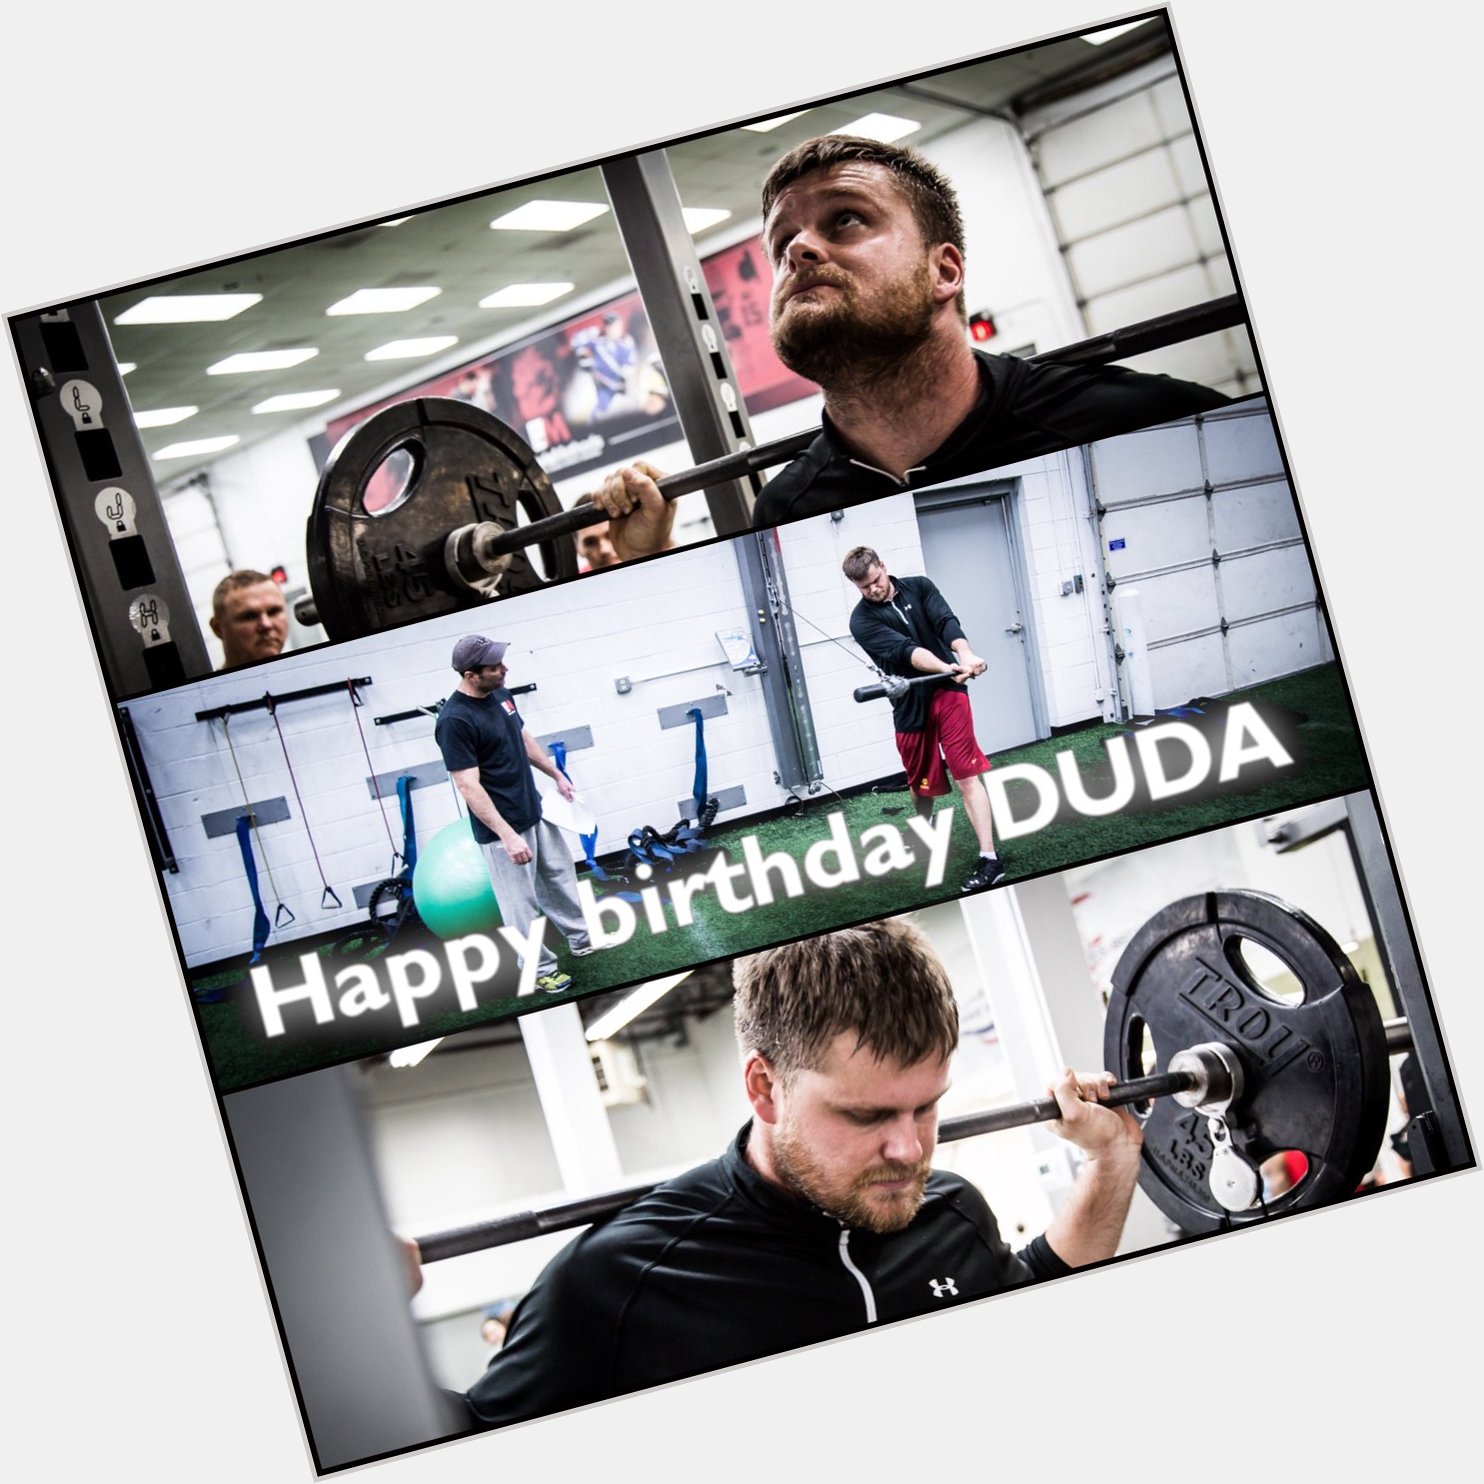 Happy birthday Lucas Duda! 